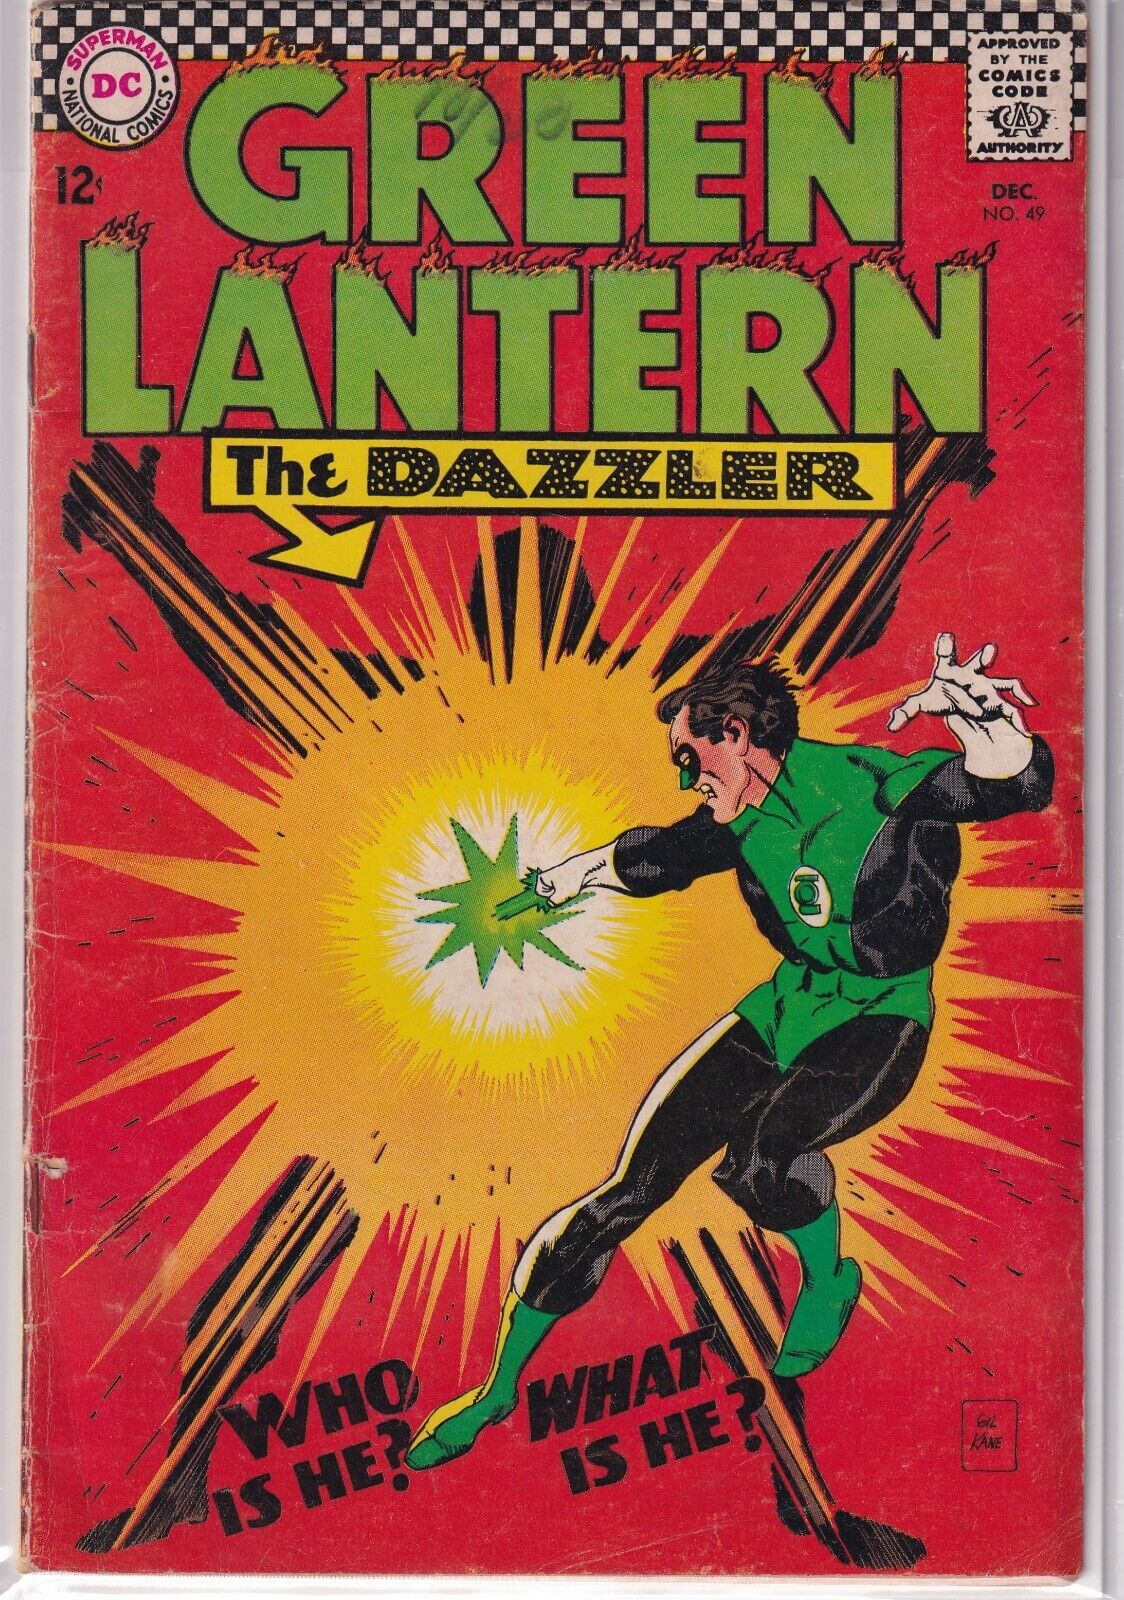 32496: DC Comics GREEN LANTERN #49 VG Grade